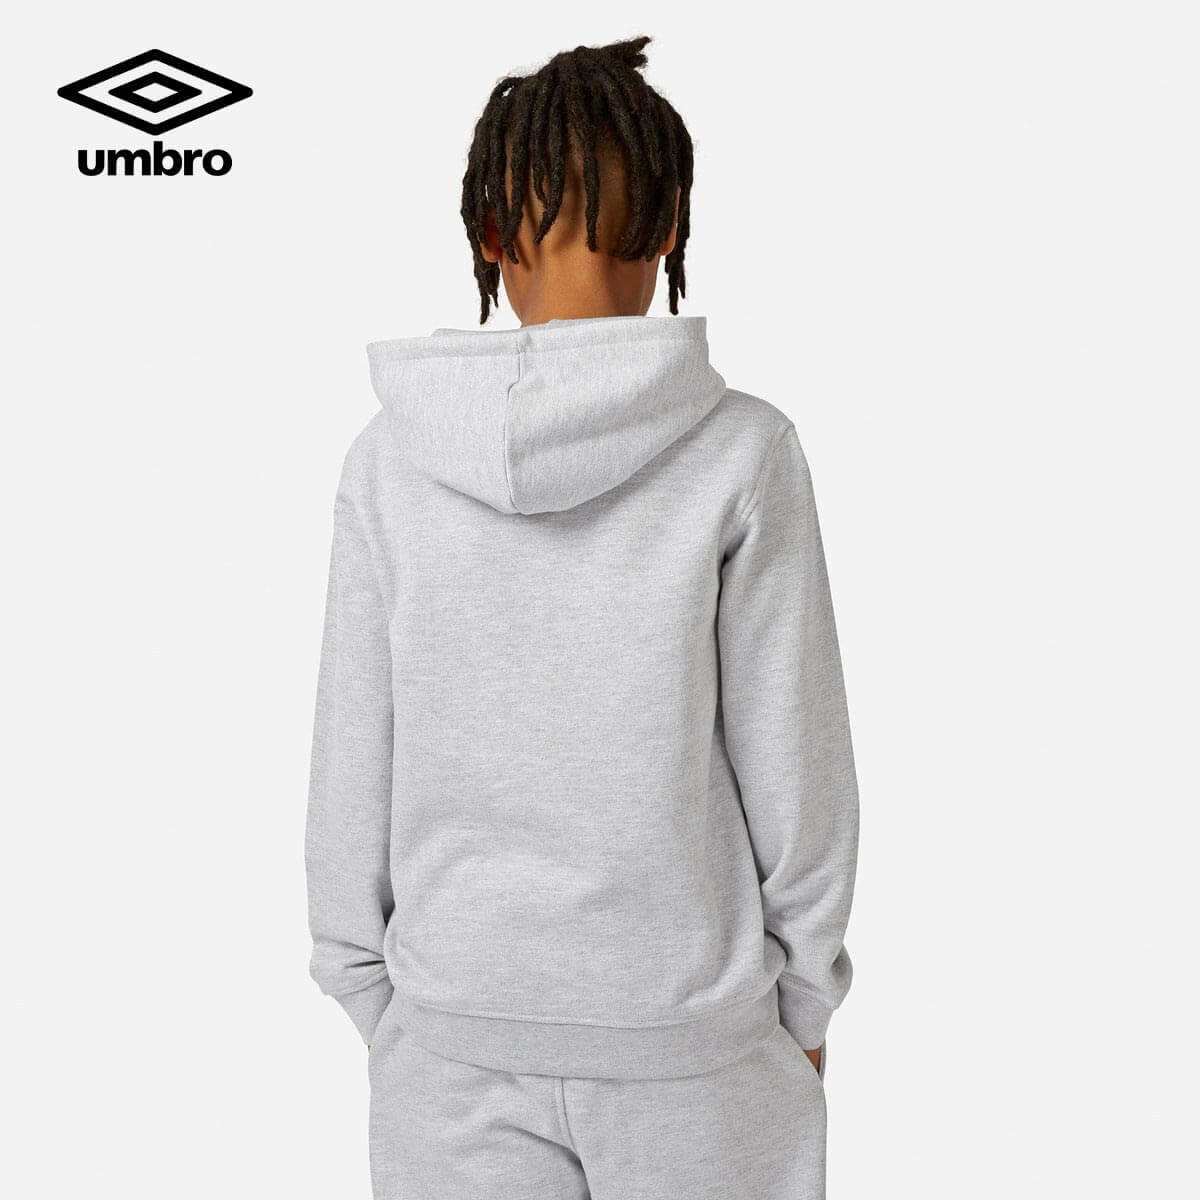 Umbro, Shop Umbro tracksuits, t-shirts & hoodies